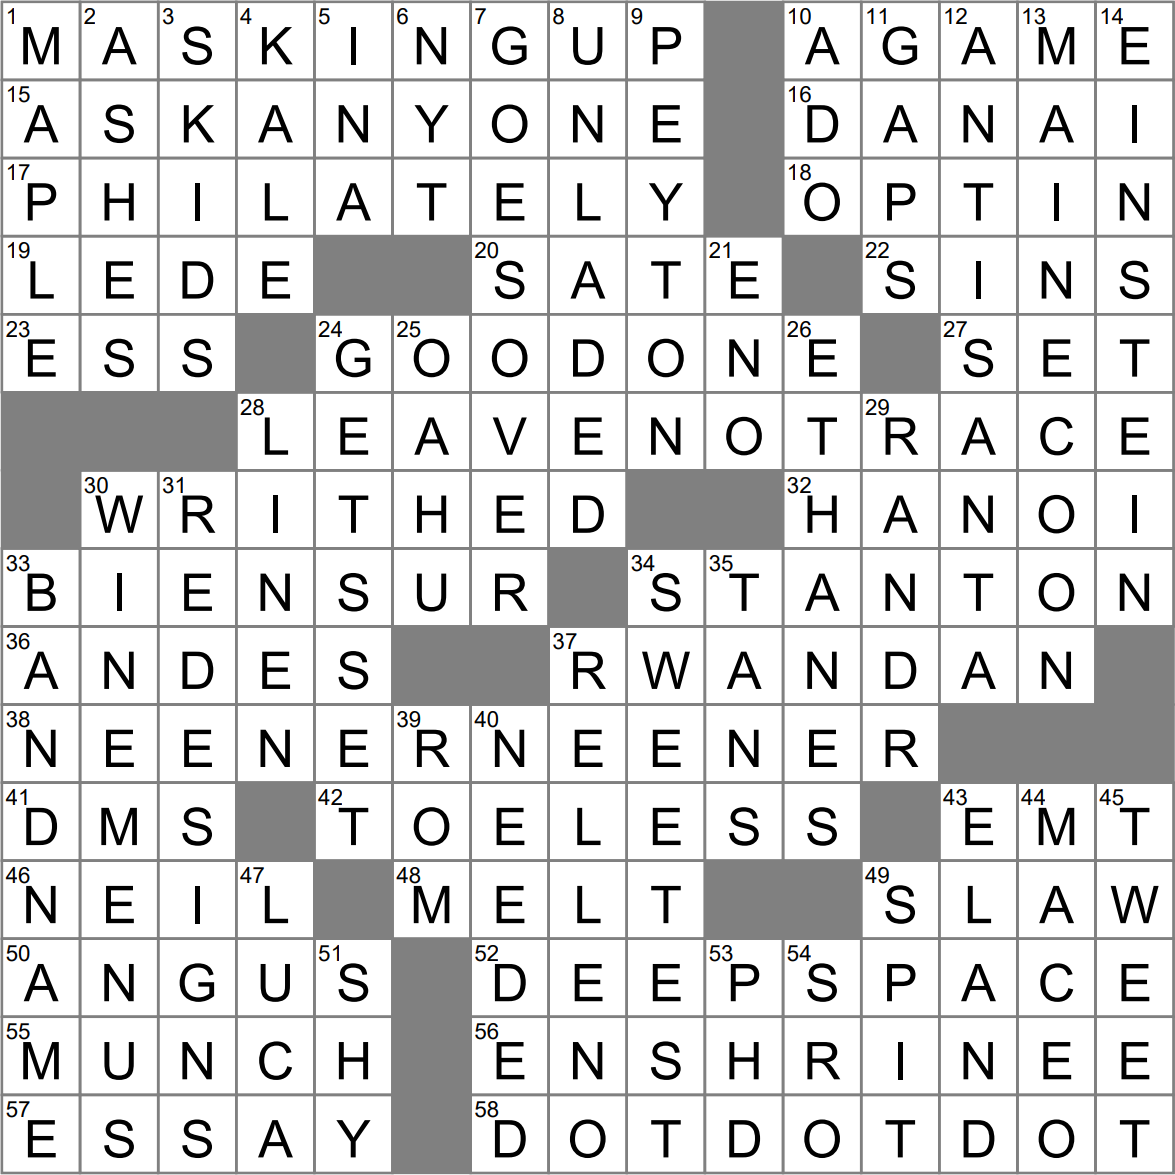 LA Times Crossword 20 May 23 Saturday LAXCrossword com